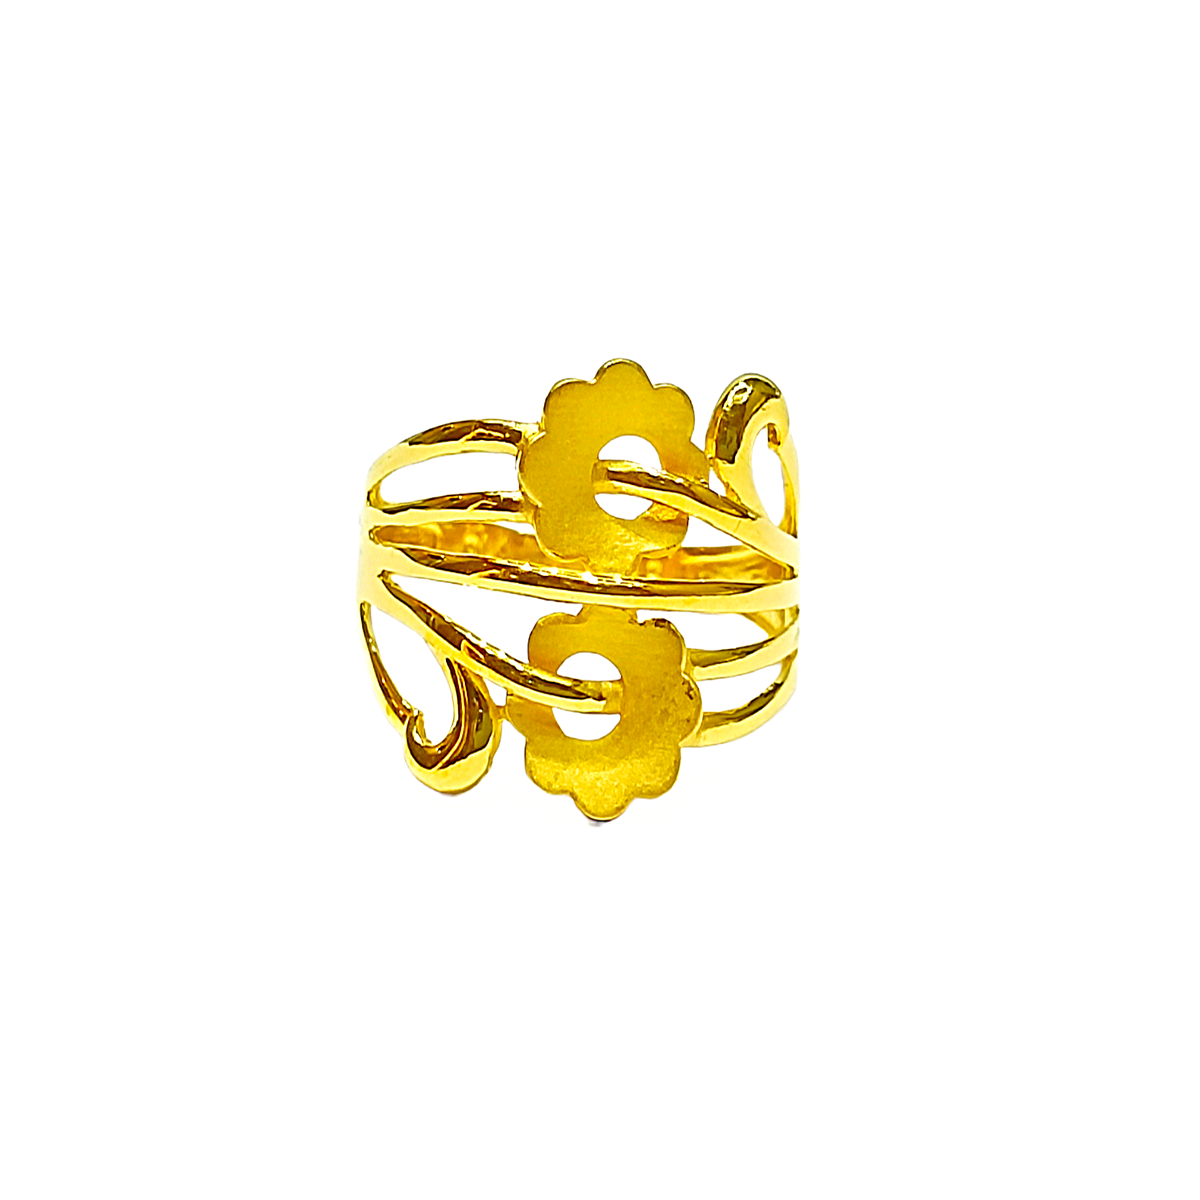 Pramoda gold ring